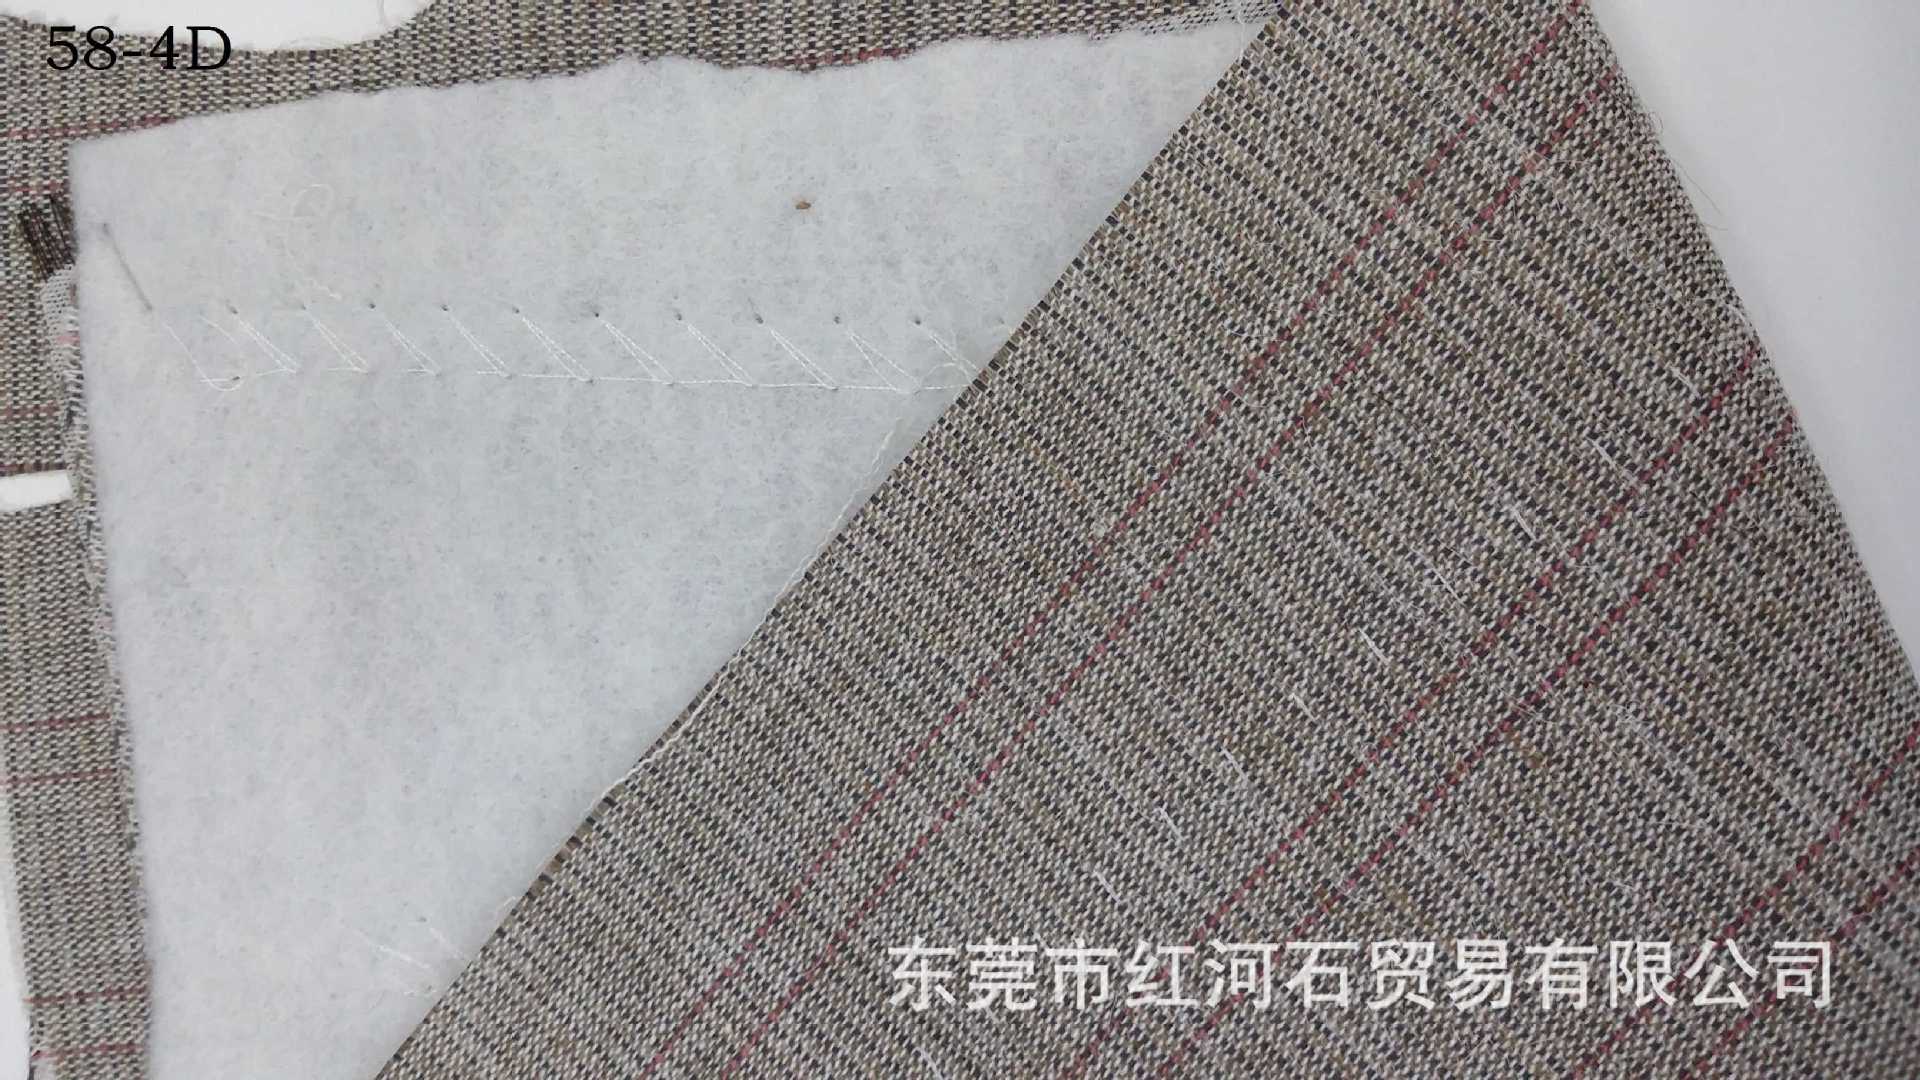 58-4D 驳头胸衬 Sewing sample (5)